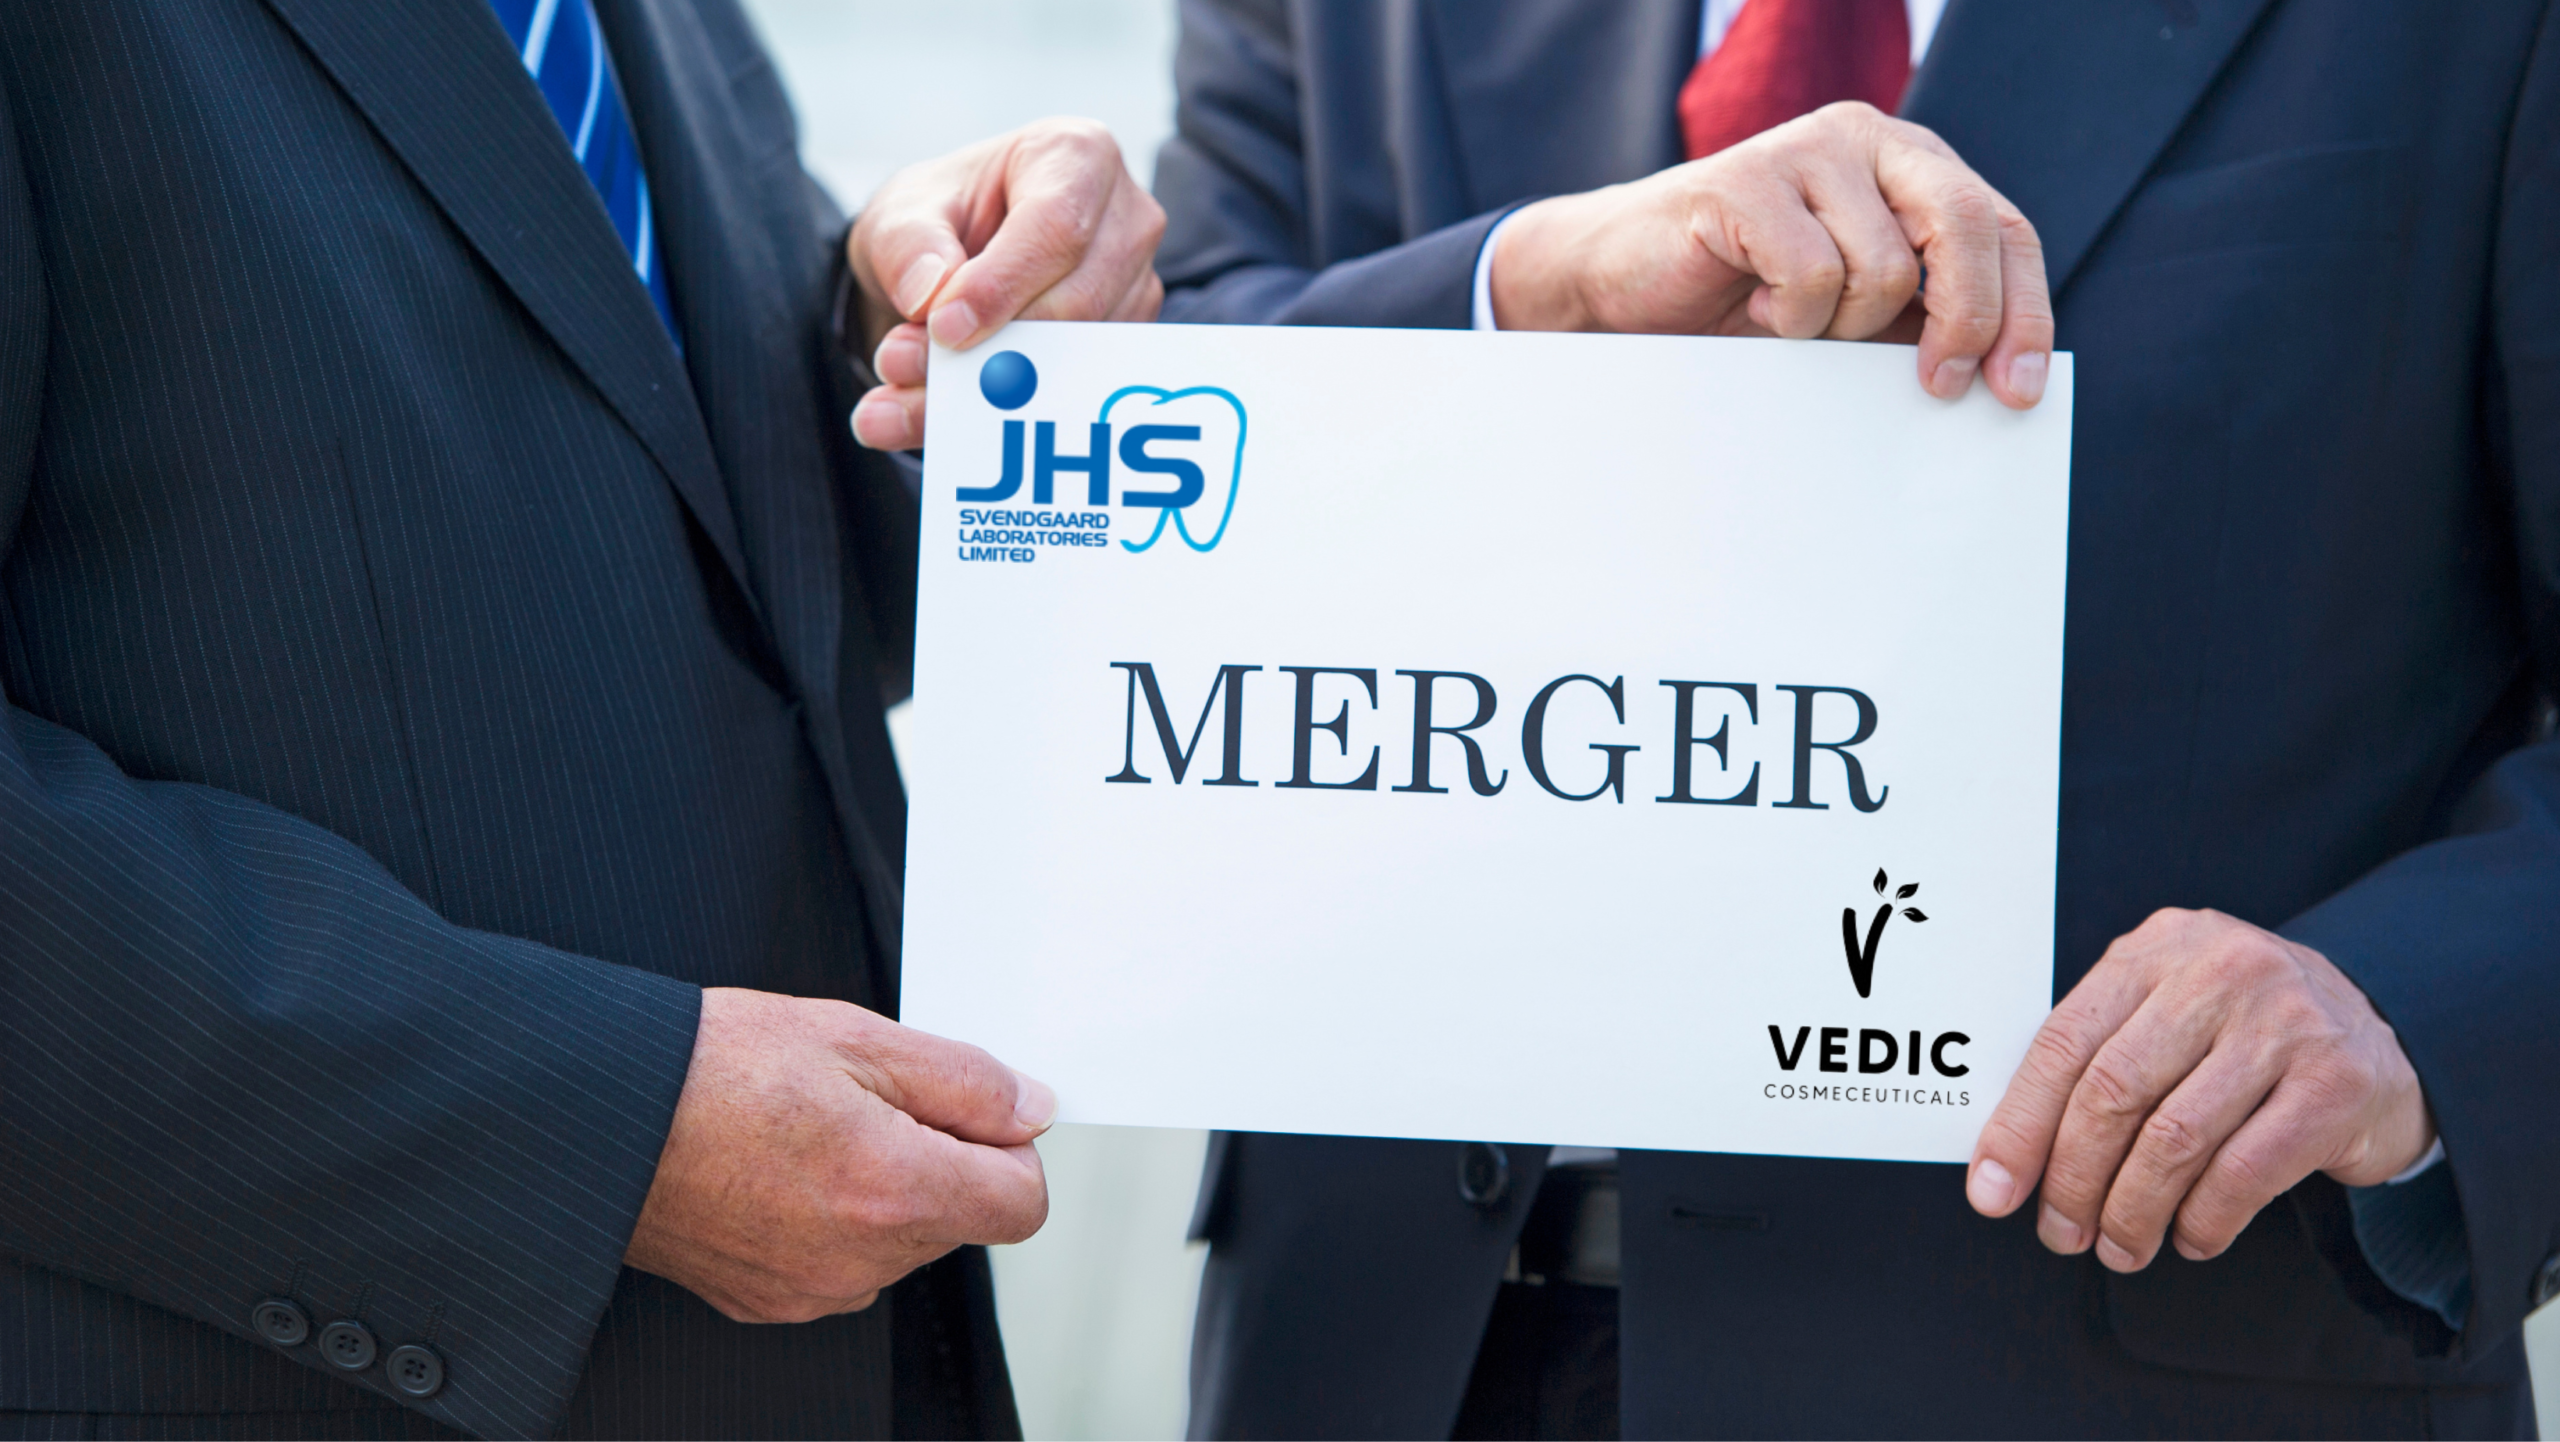 JHS-Svengaard-Vedic-Cosmecuticals-Merger-Venture-Capital